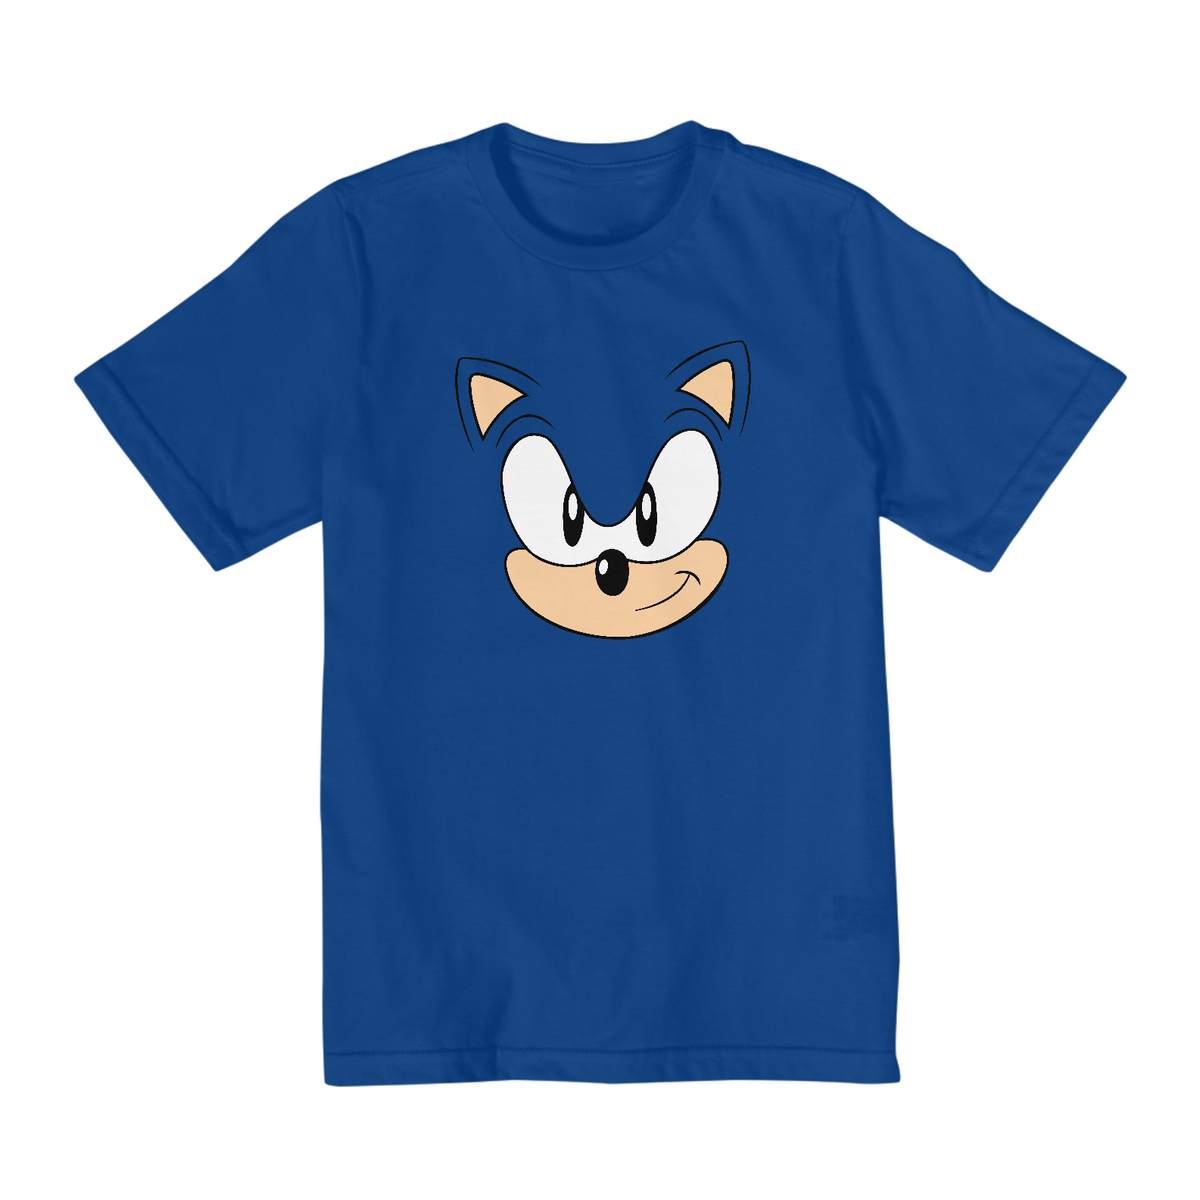 Nome do produto: Camiseta Infantil - Unissex - 2 à 8 anos - Sonic